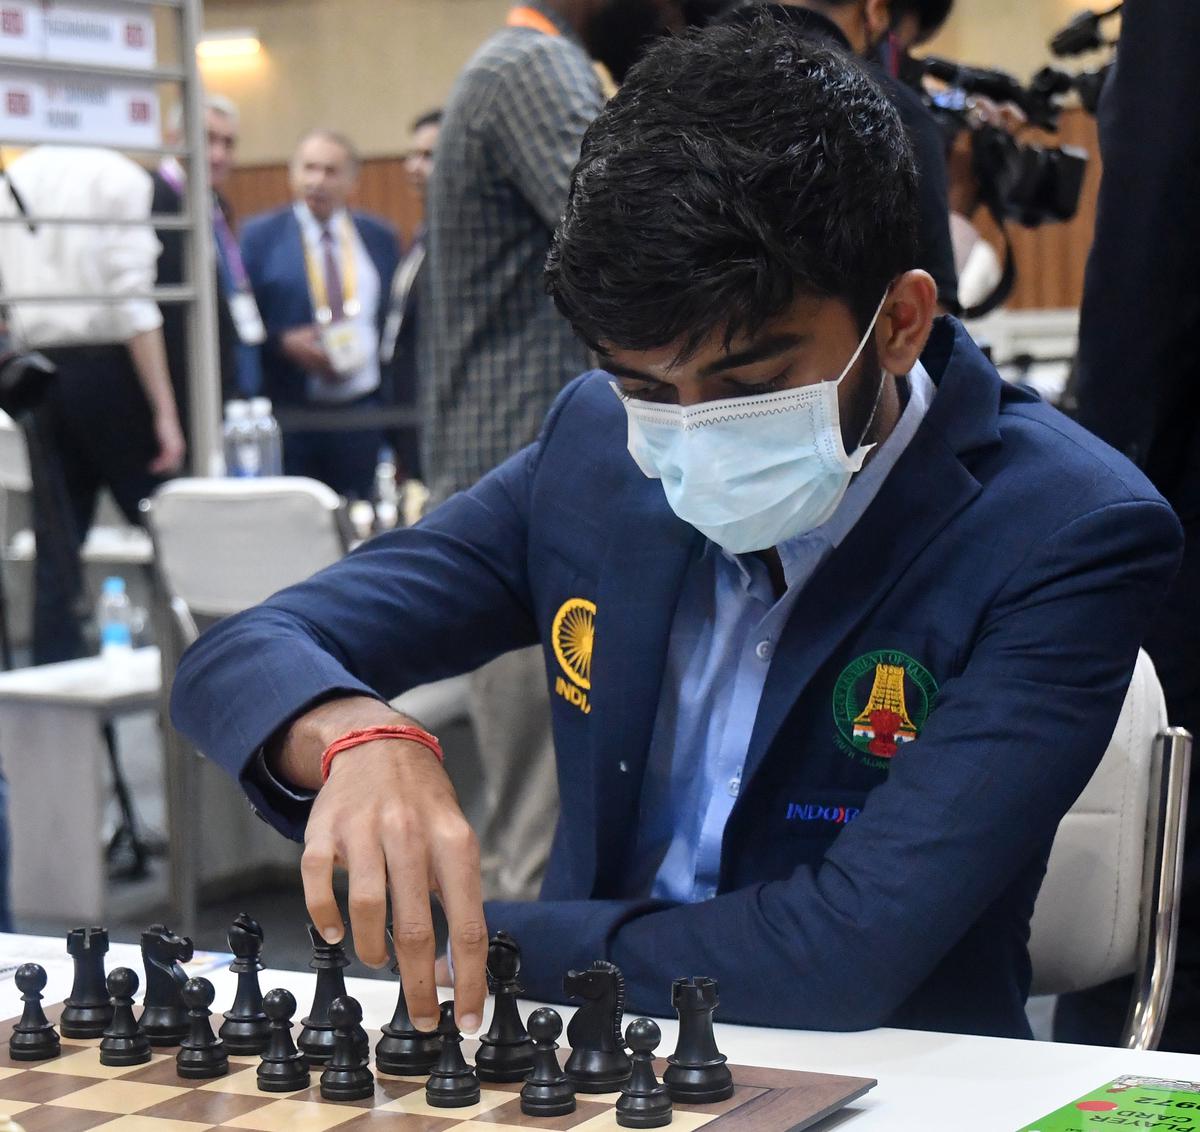 Gukesh beats World no.2 Alireza Firouzja, moves to 2742, World no